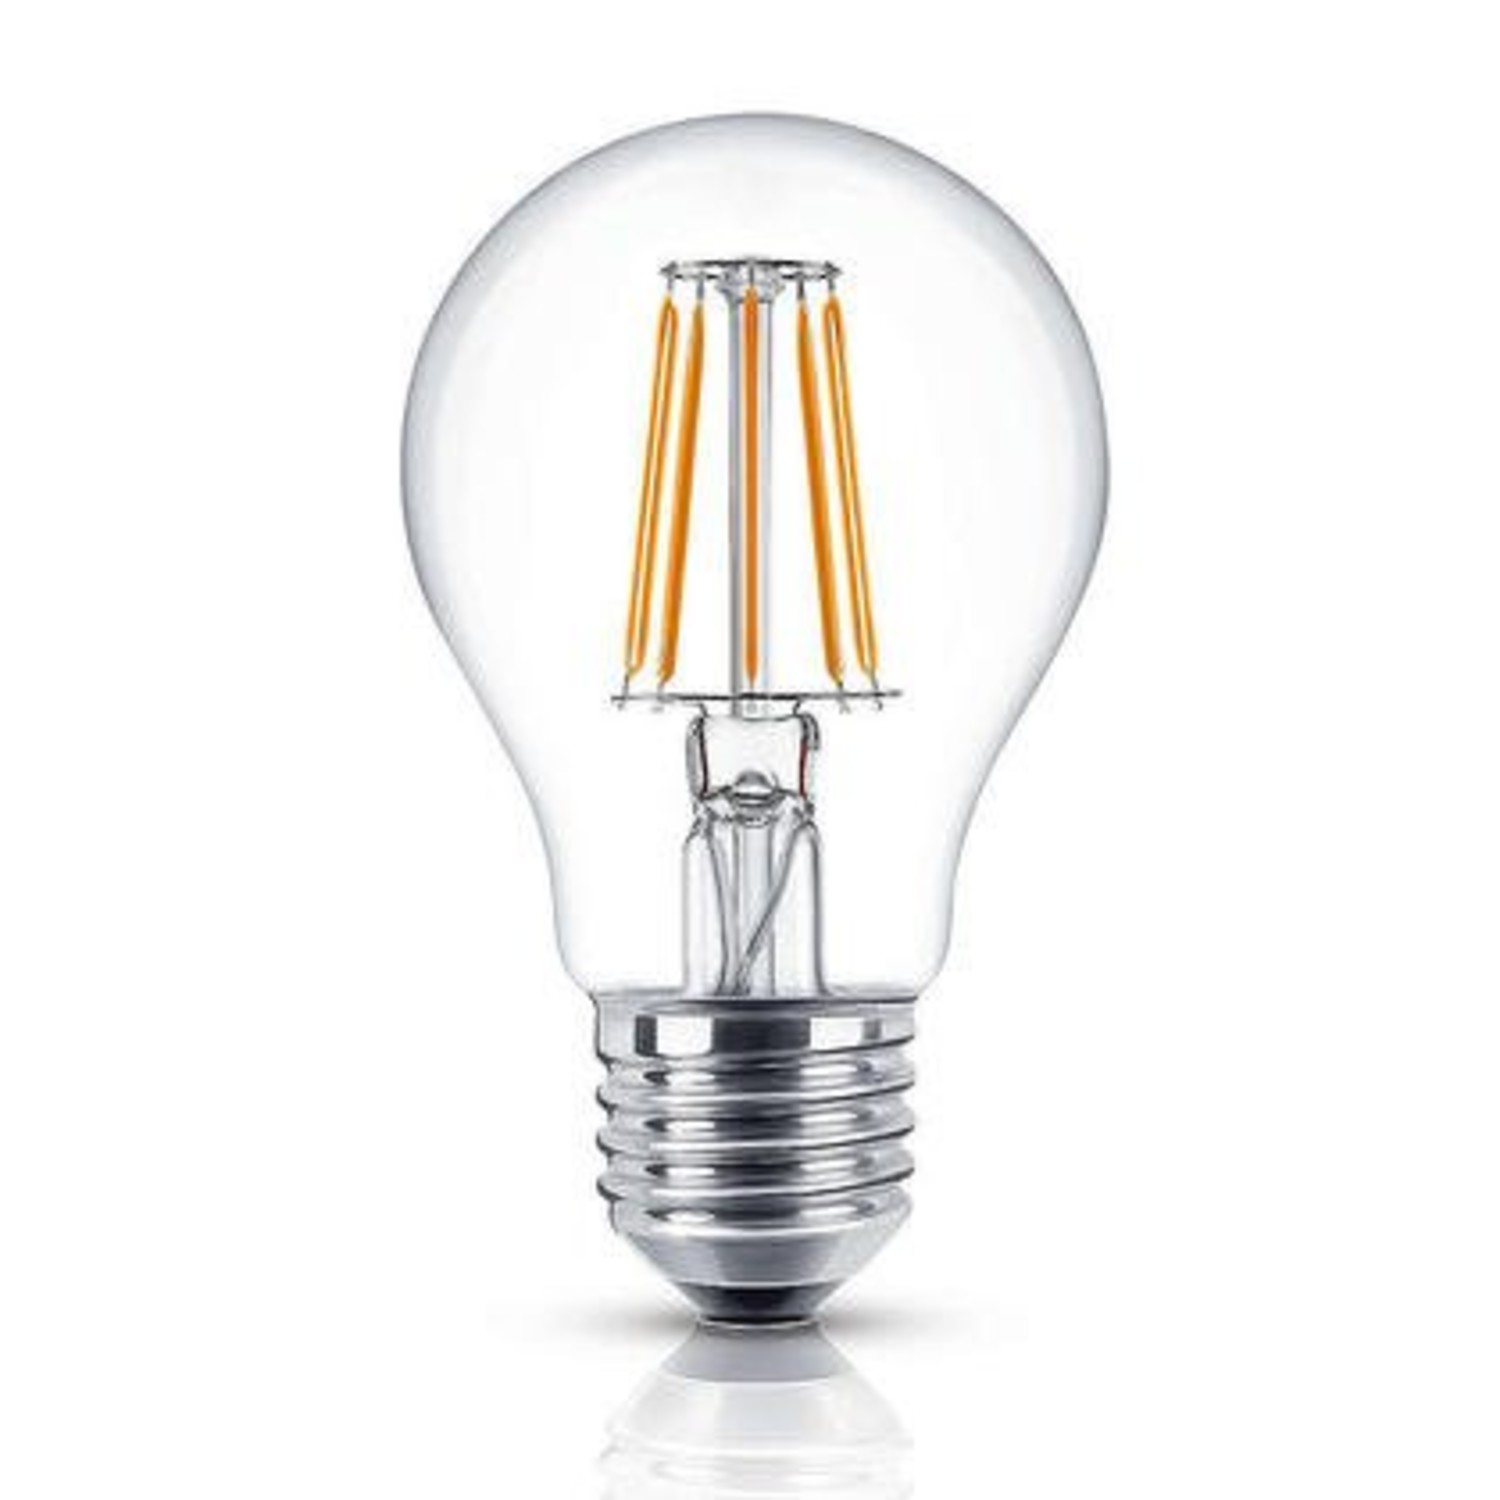 Erge, ernstige Teken Oude tijden LED Filament lamp dimbaar - E27 A60 - 4W vervangt 50W - 2700K warm wit -  Ledlichtdiscounter.nl